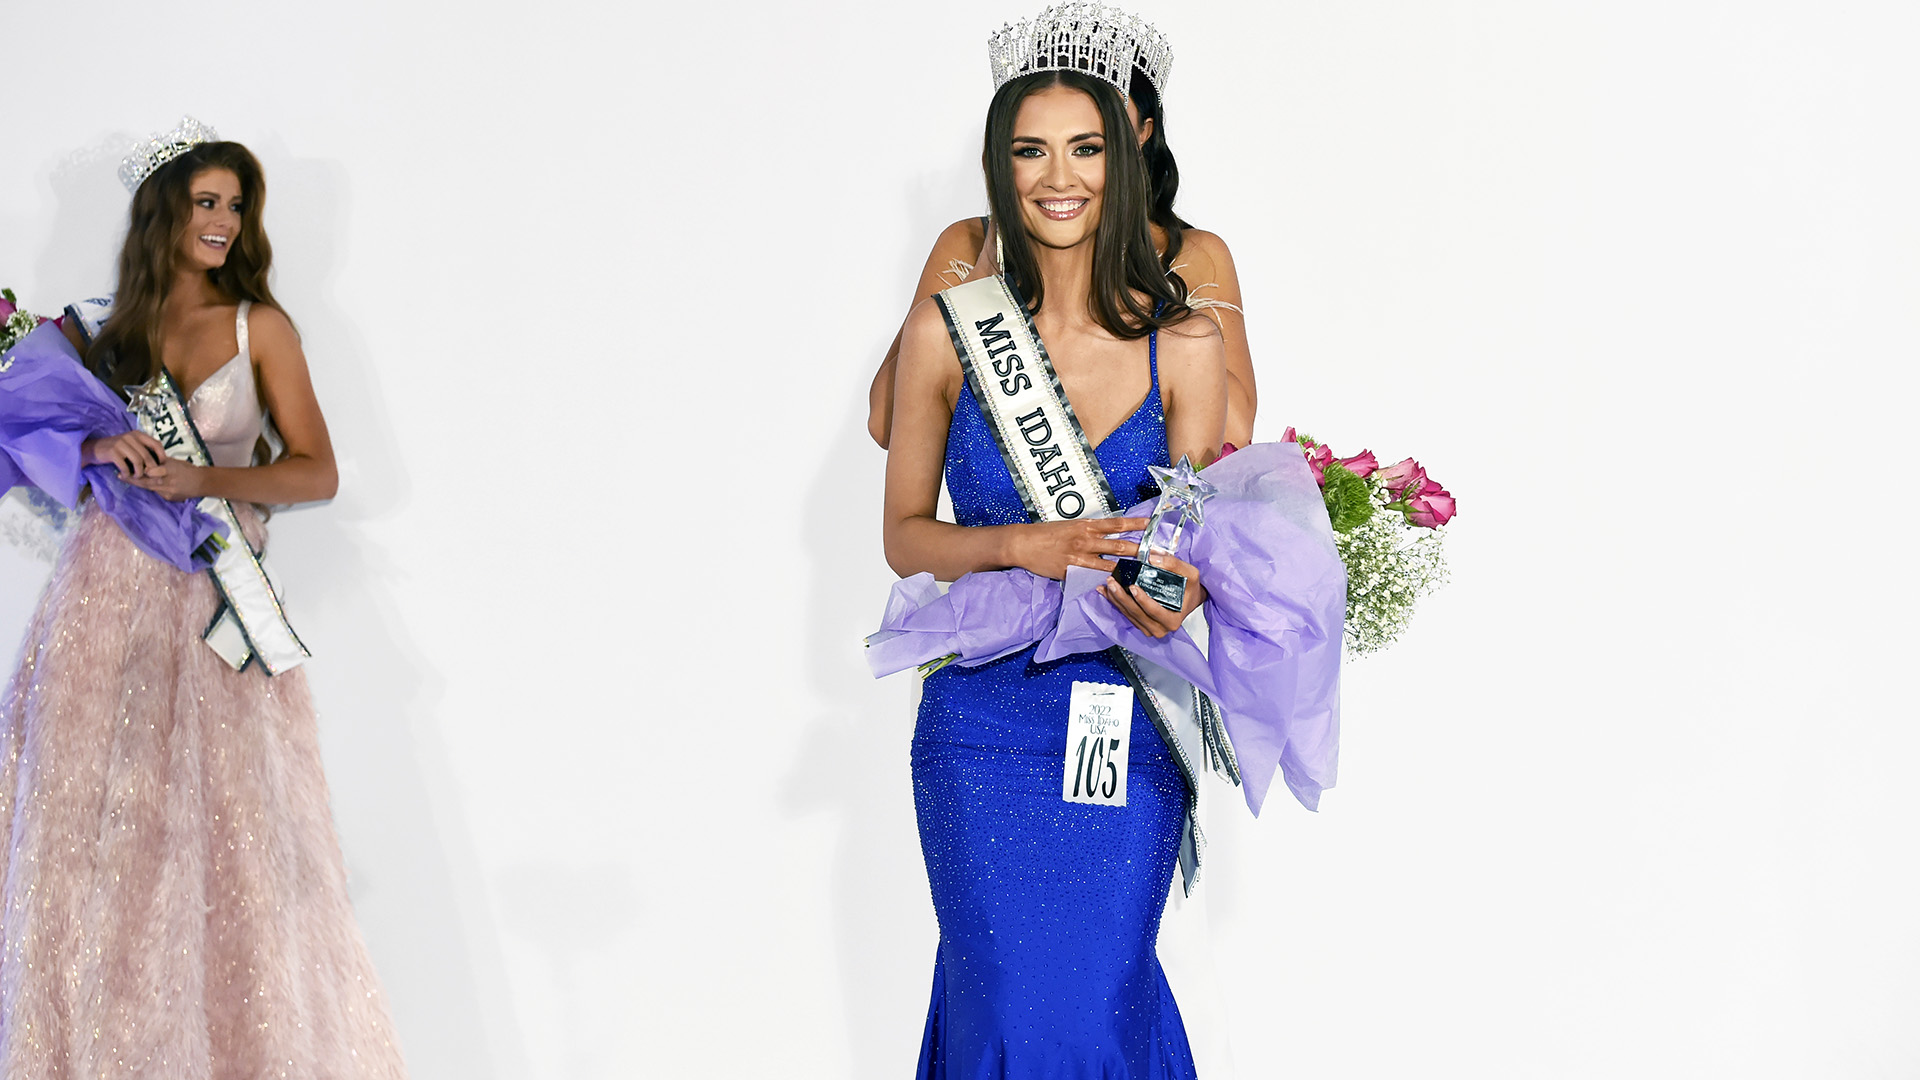 Idaho STEM Teacher vying for Miss USA Crown